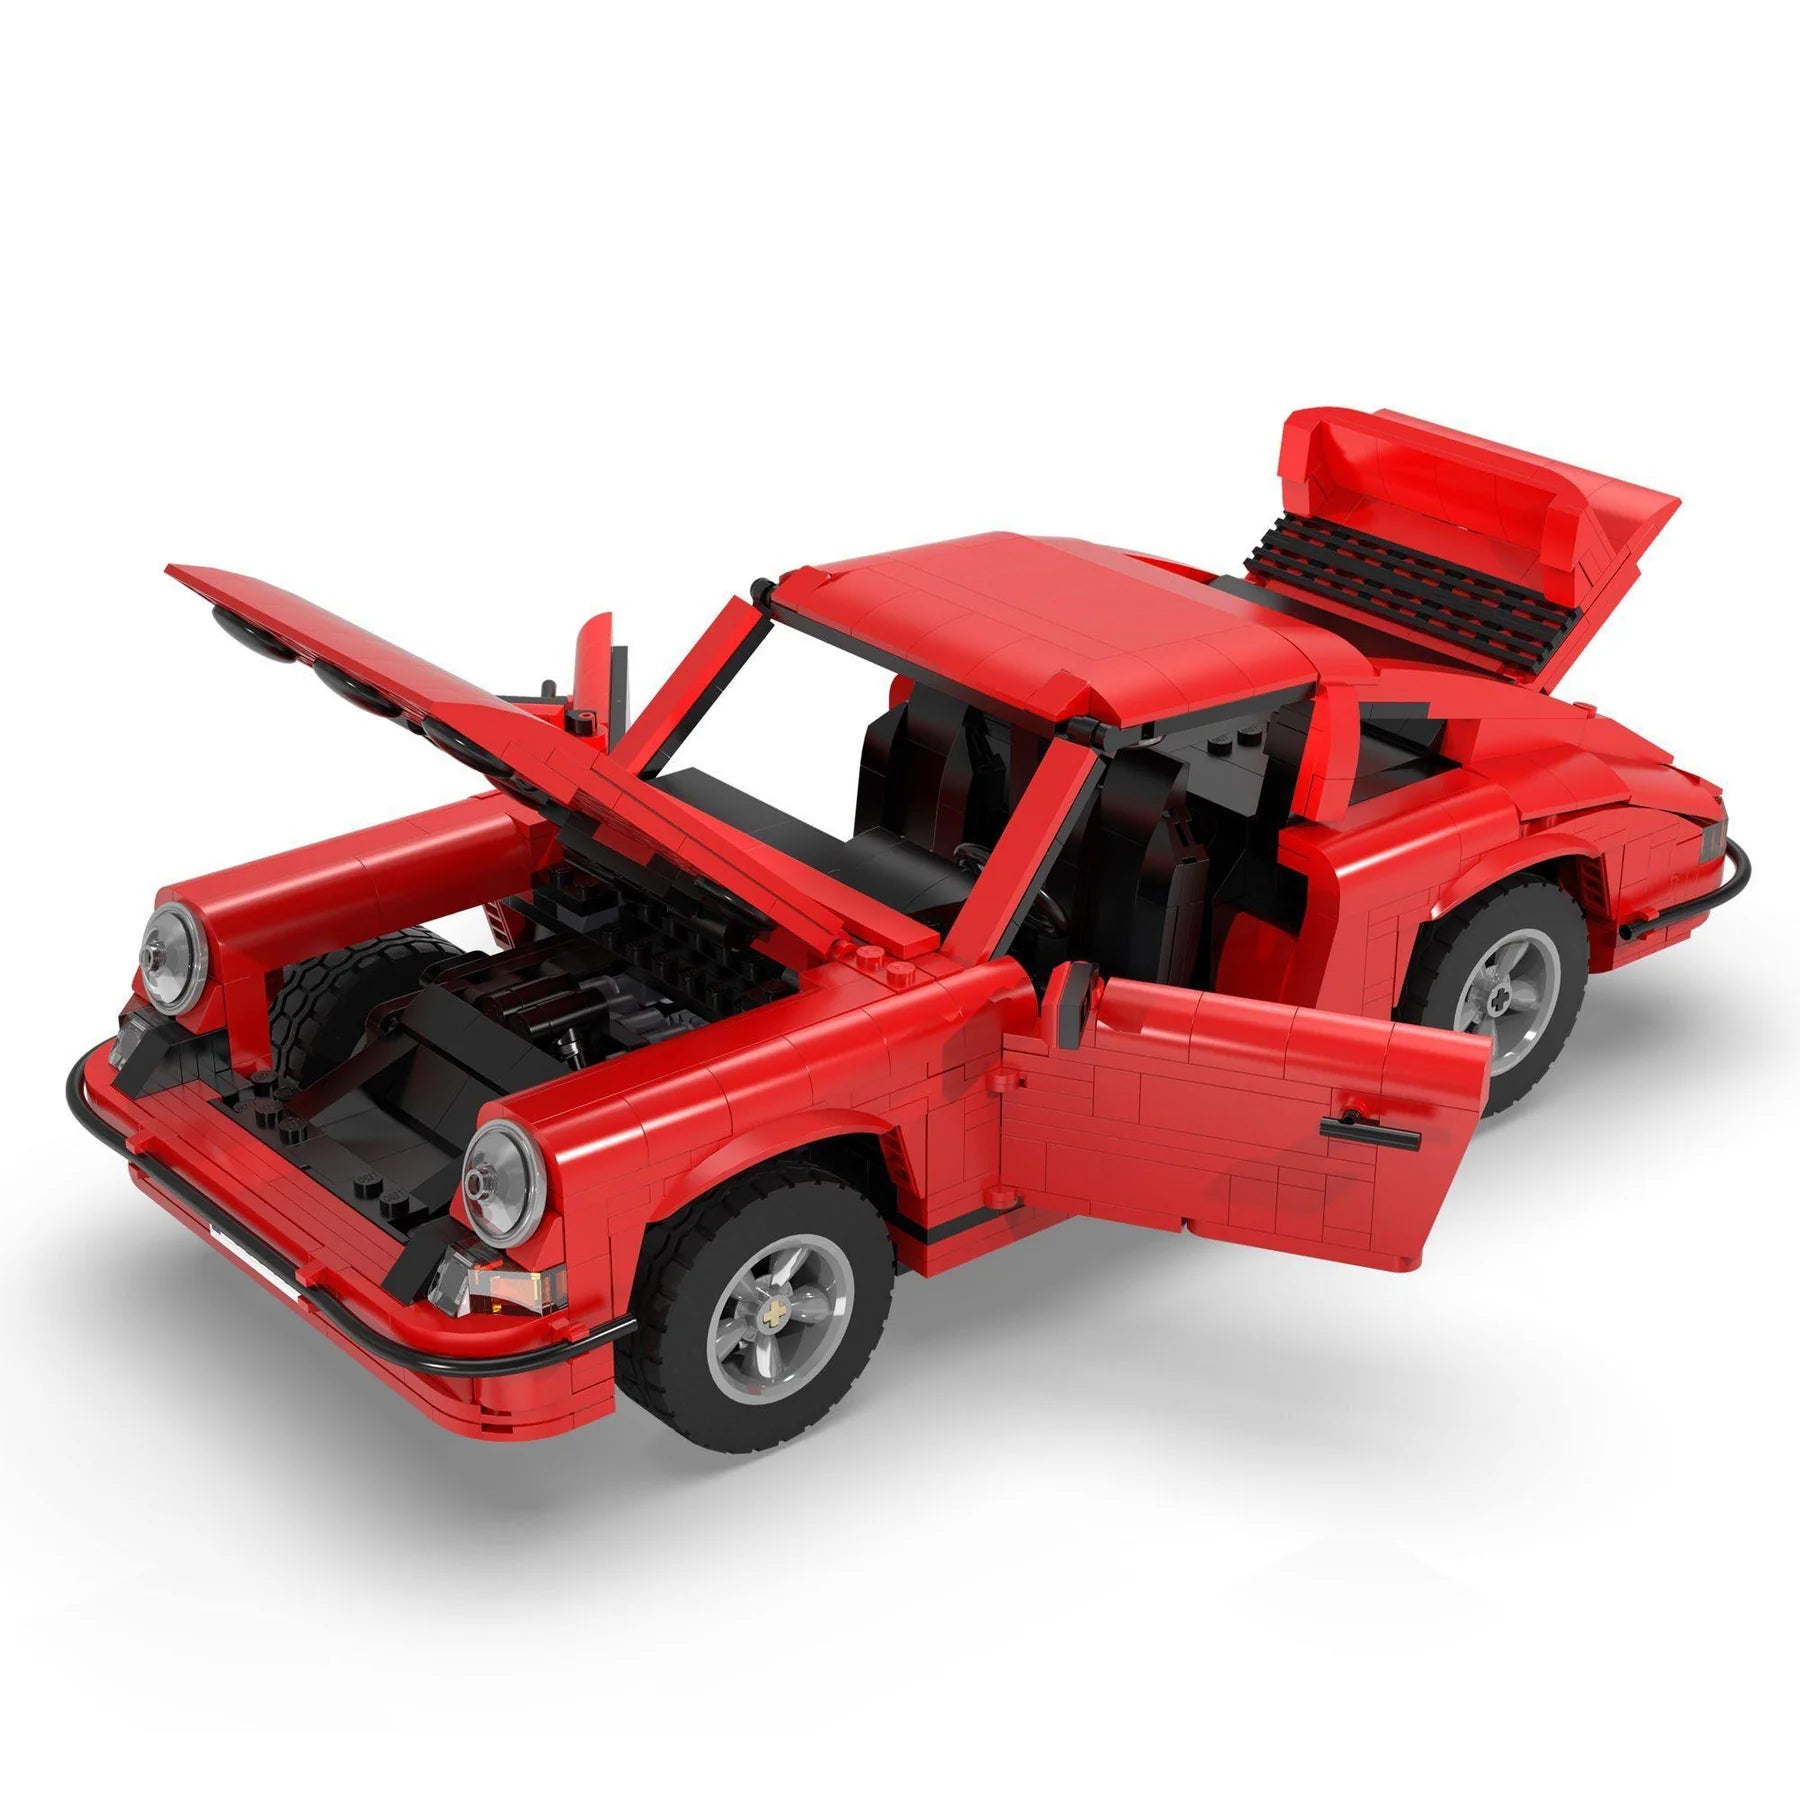 CaDA Bricks November Release: C61045W Classic RS Sports Car